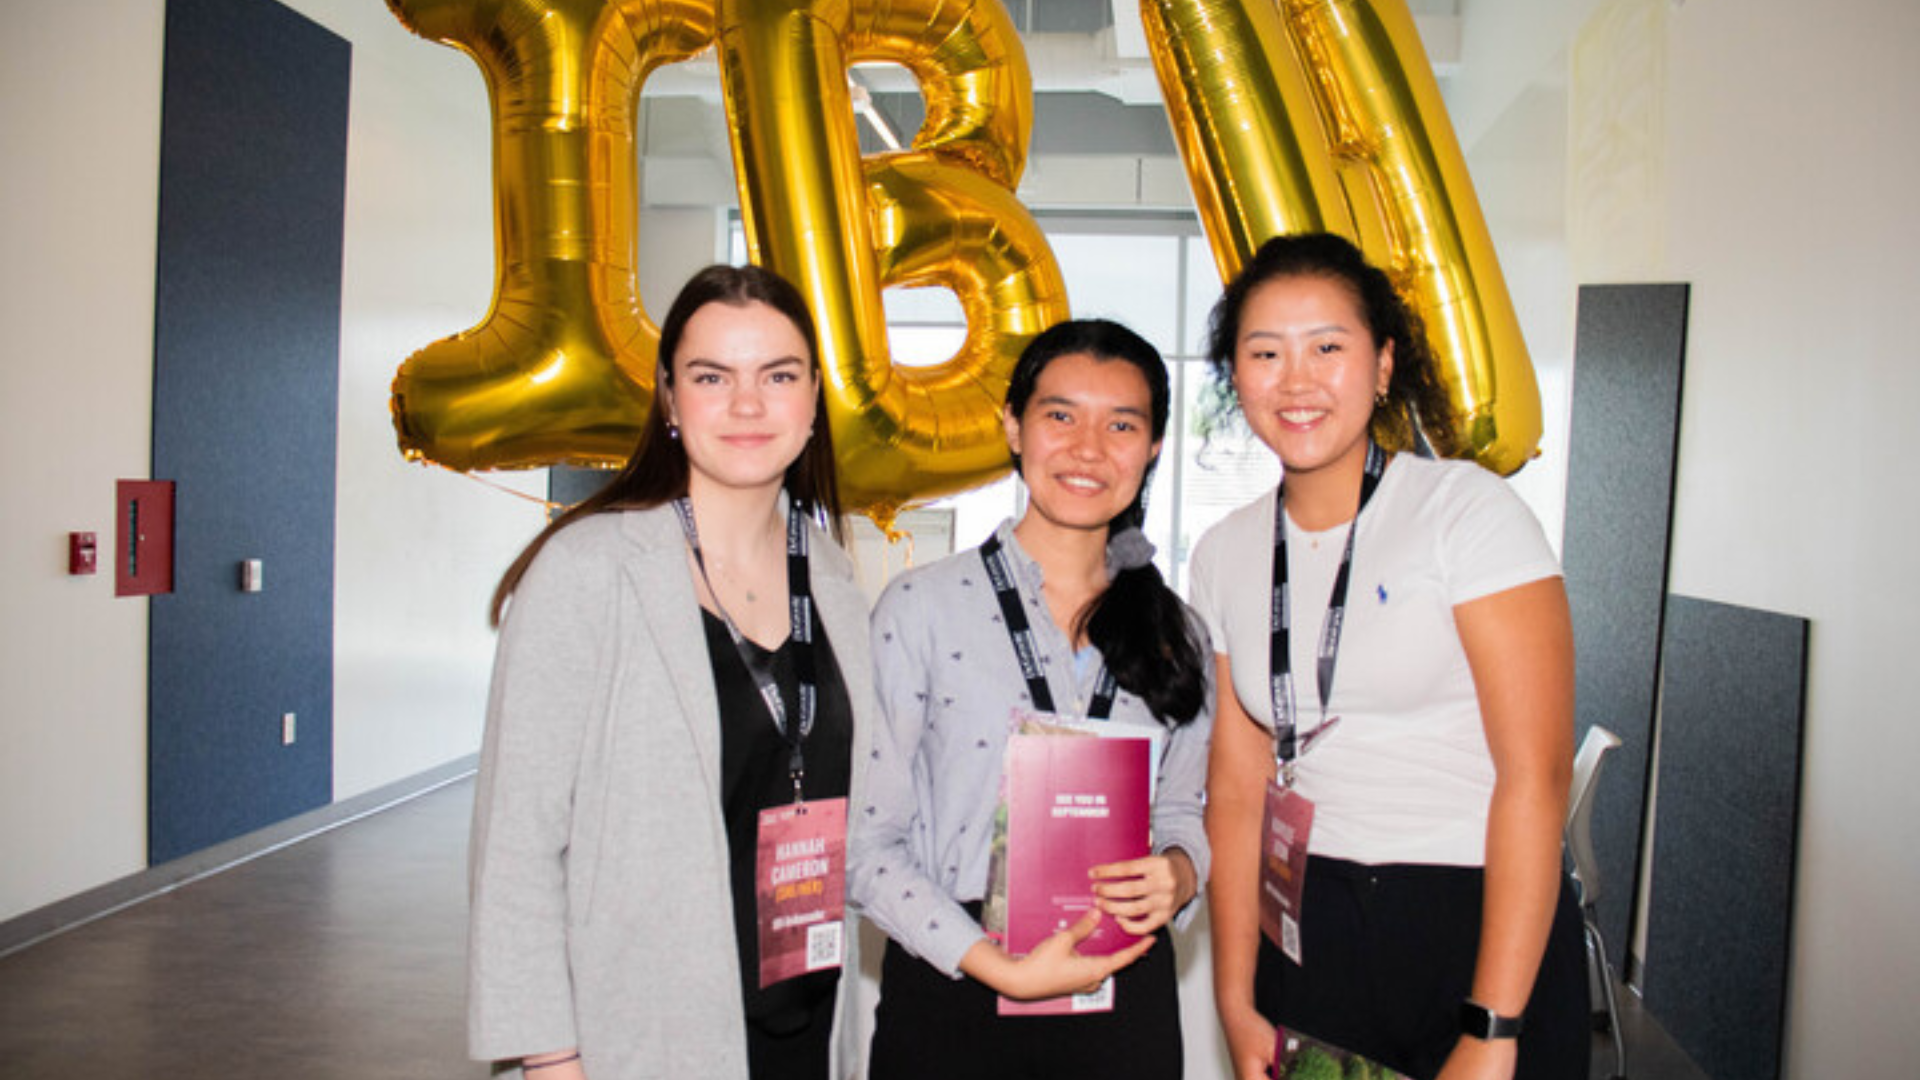 Undergraduate-IBH. Three female individuals posing adjacent to a sizable balloon featuring the alphanumeric symbol 